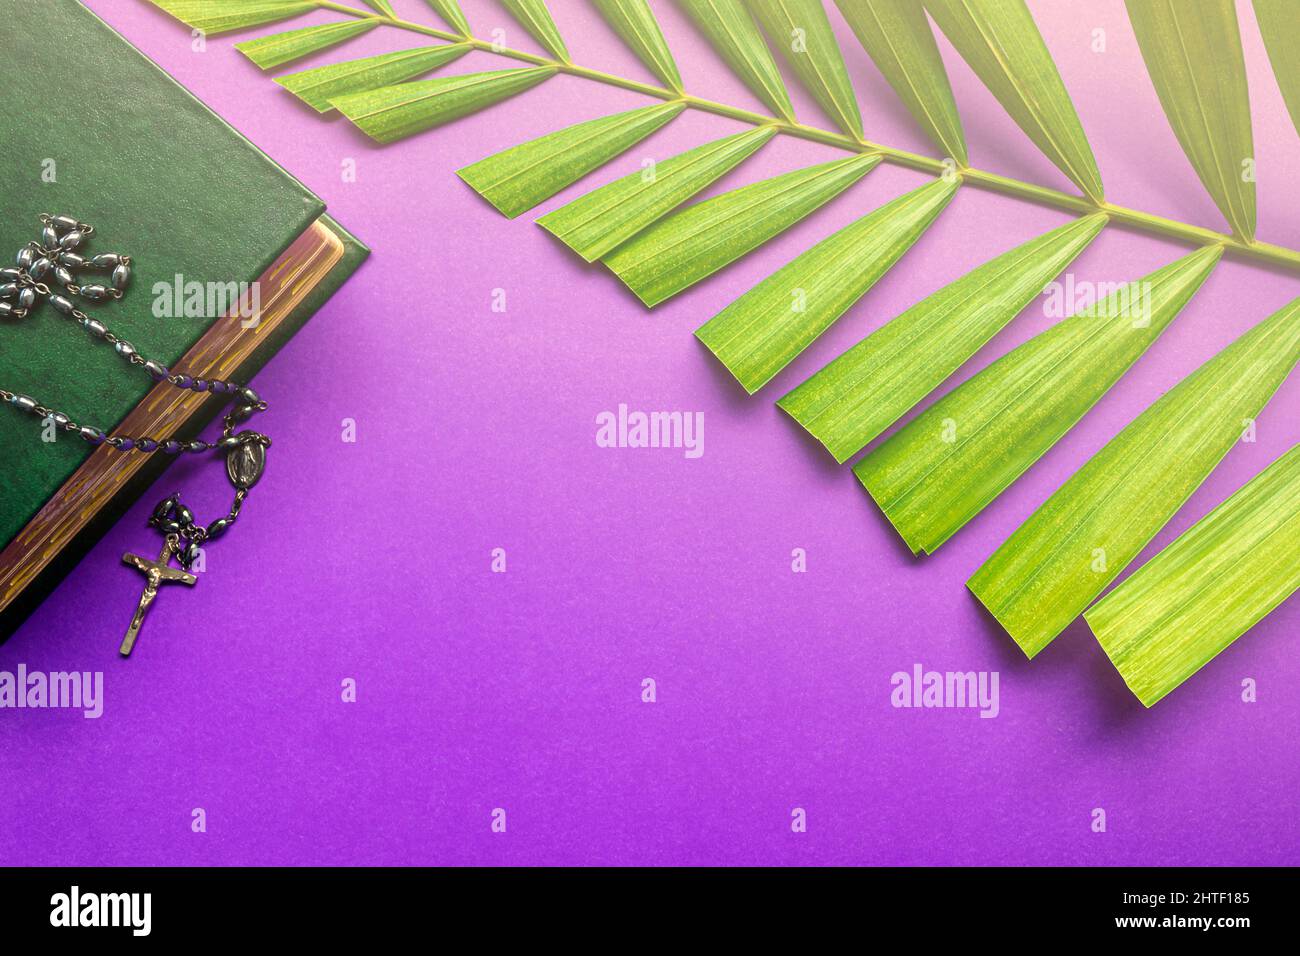 La Santa Biblia, la cruz y las hojas de palma sobre fondo púrpura. Concepto de Semana Santa. Foto de stock